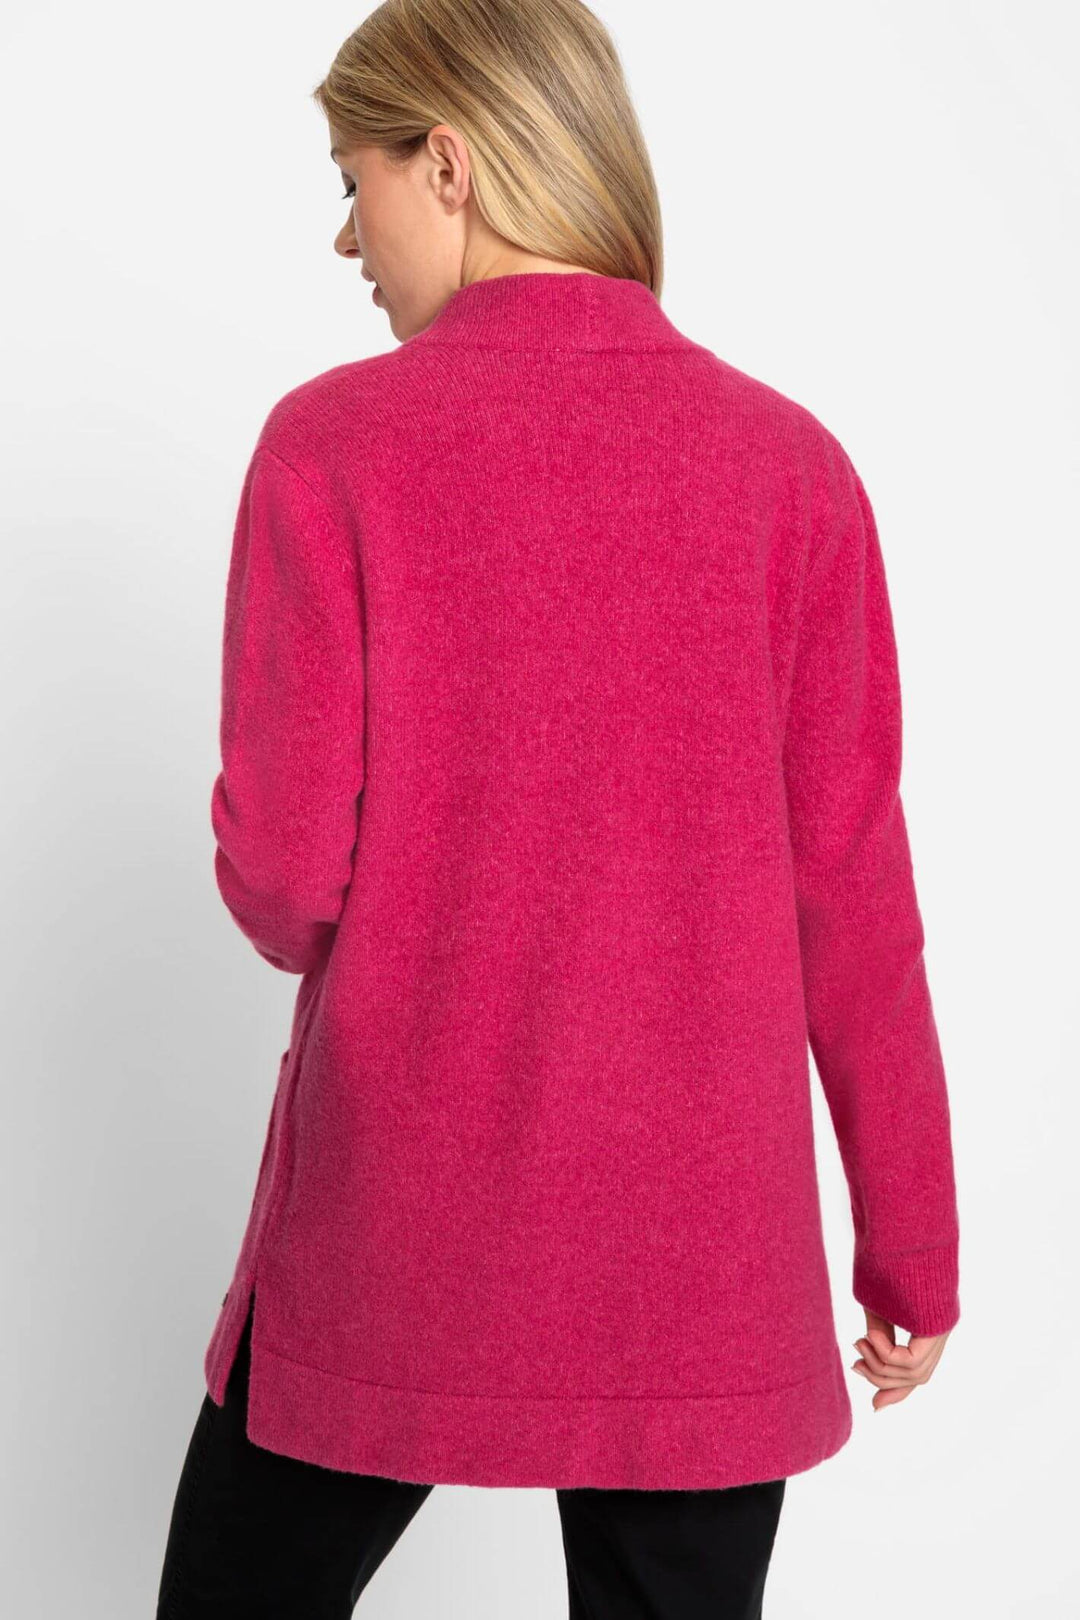 Olsen 11004232 Raspberry Pink Knitted Cardigan